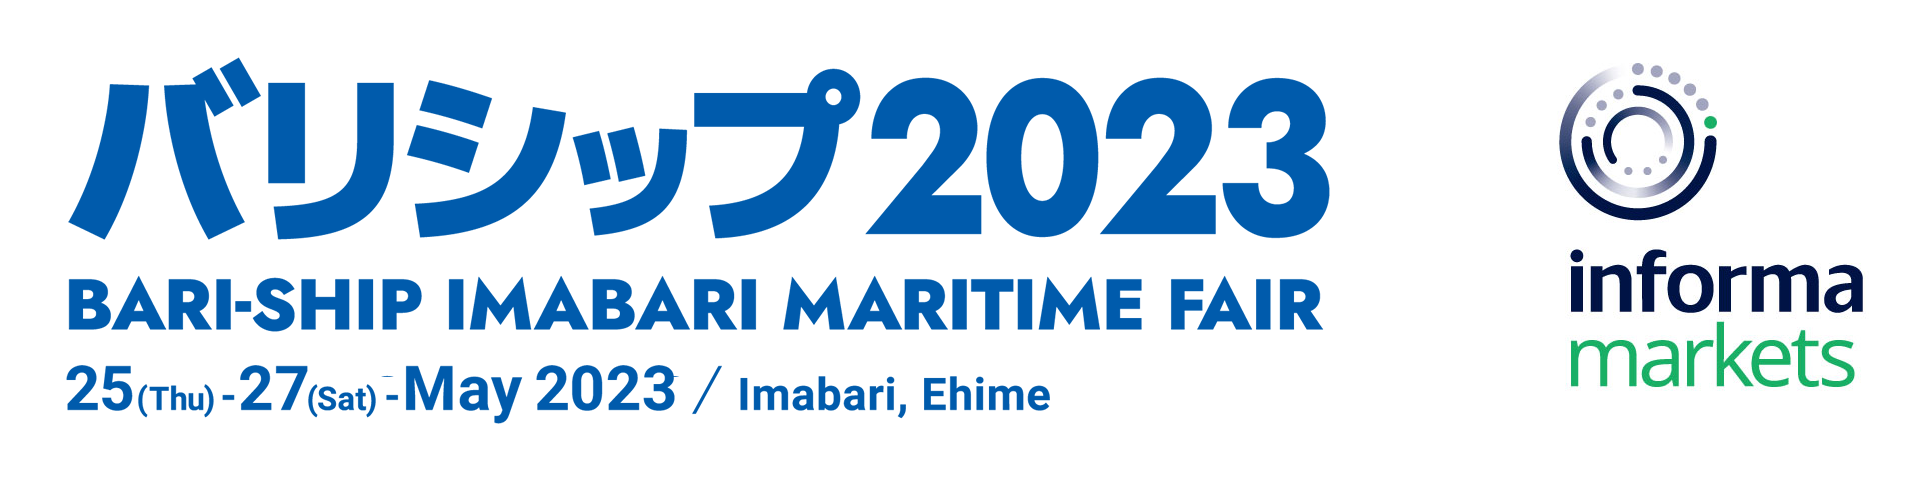 Bari-Ship 2021 7-9 October 2021  